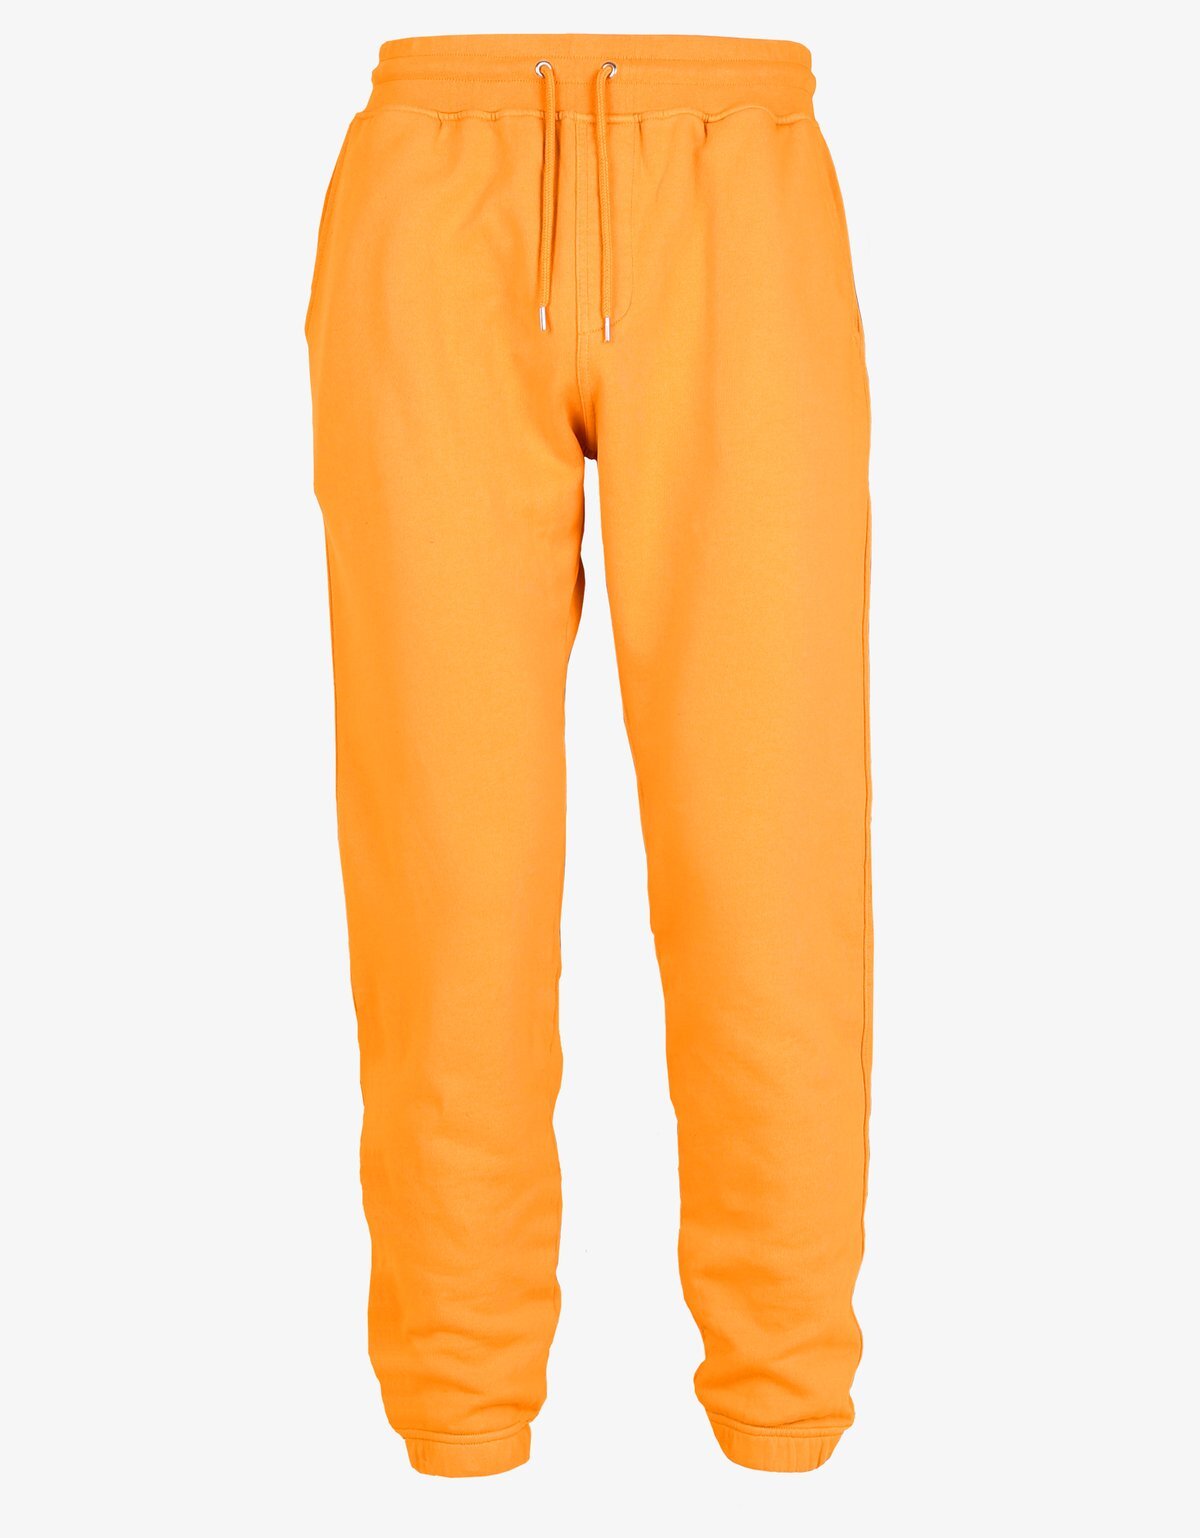 Classic_Organic_Sweatpants-Pants-CS1009-Sunny_Orange_600x@2x.jpg